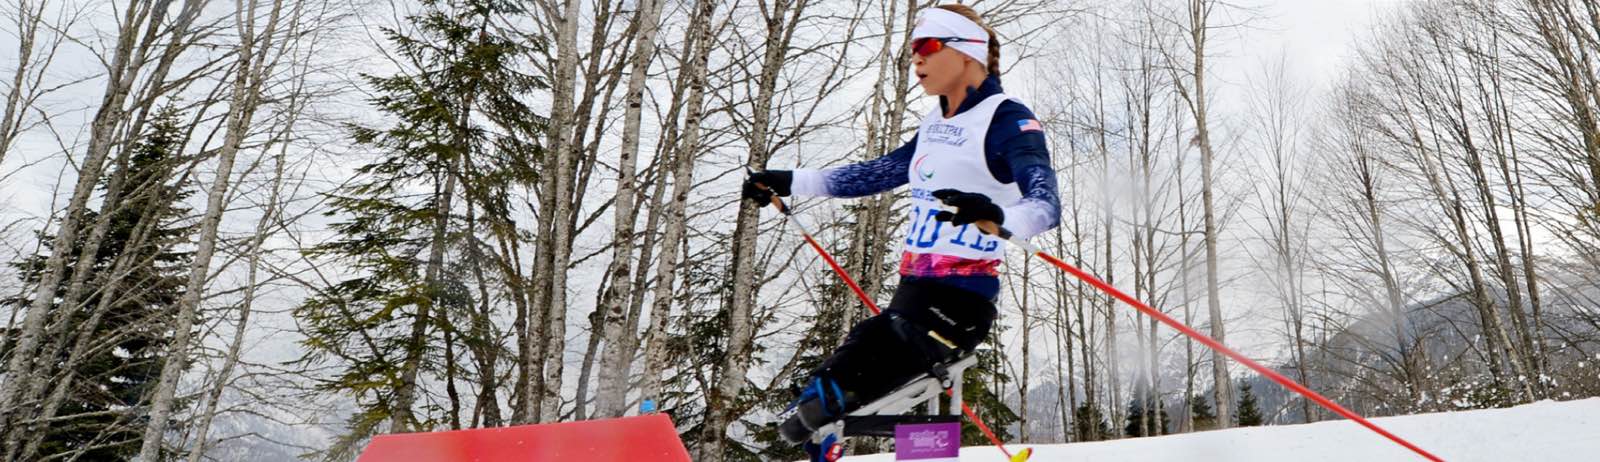 Oksana Masters nordic skiing